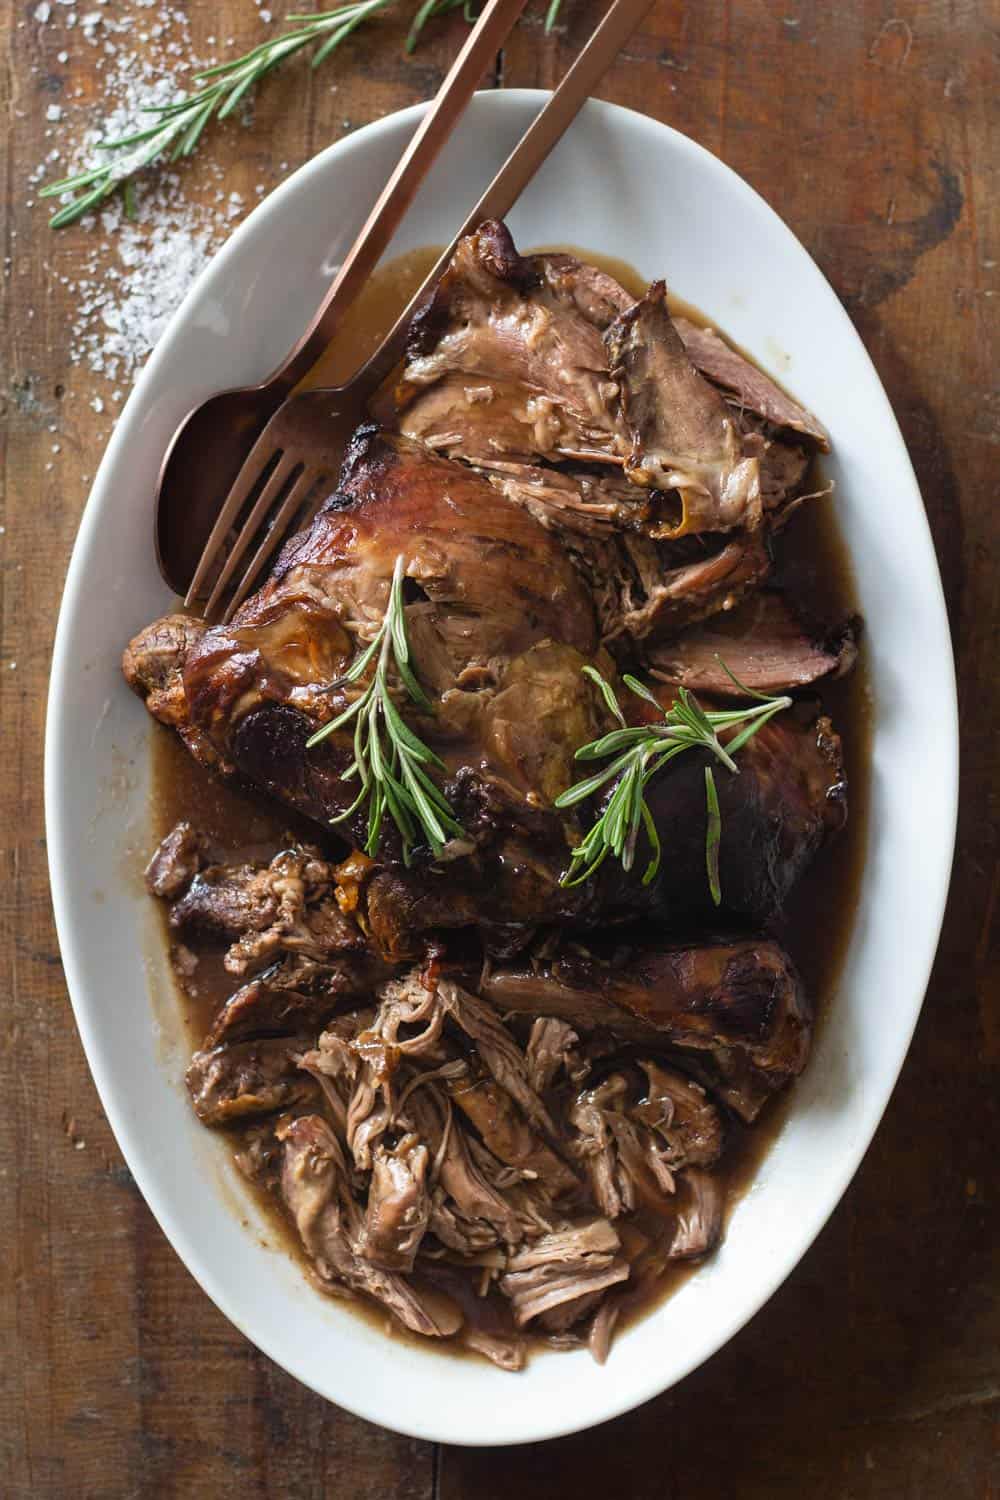 Leg of lamb on a serving platter